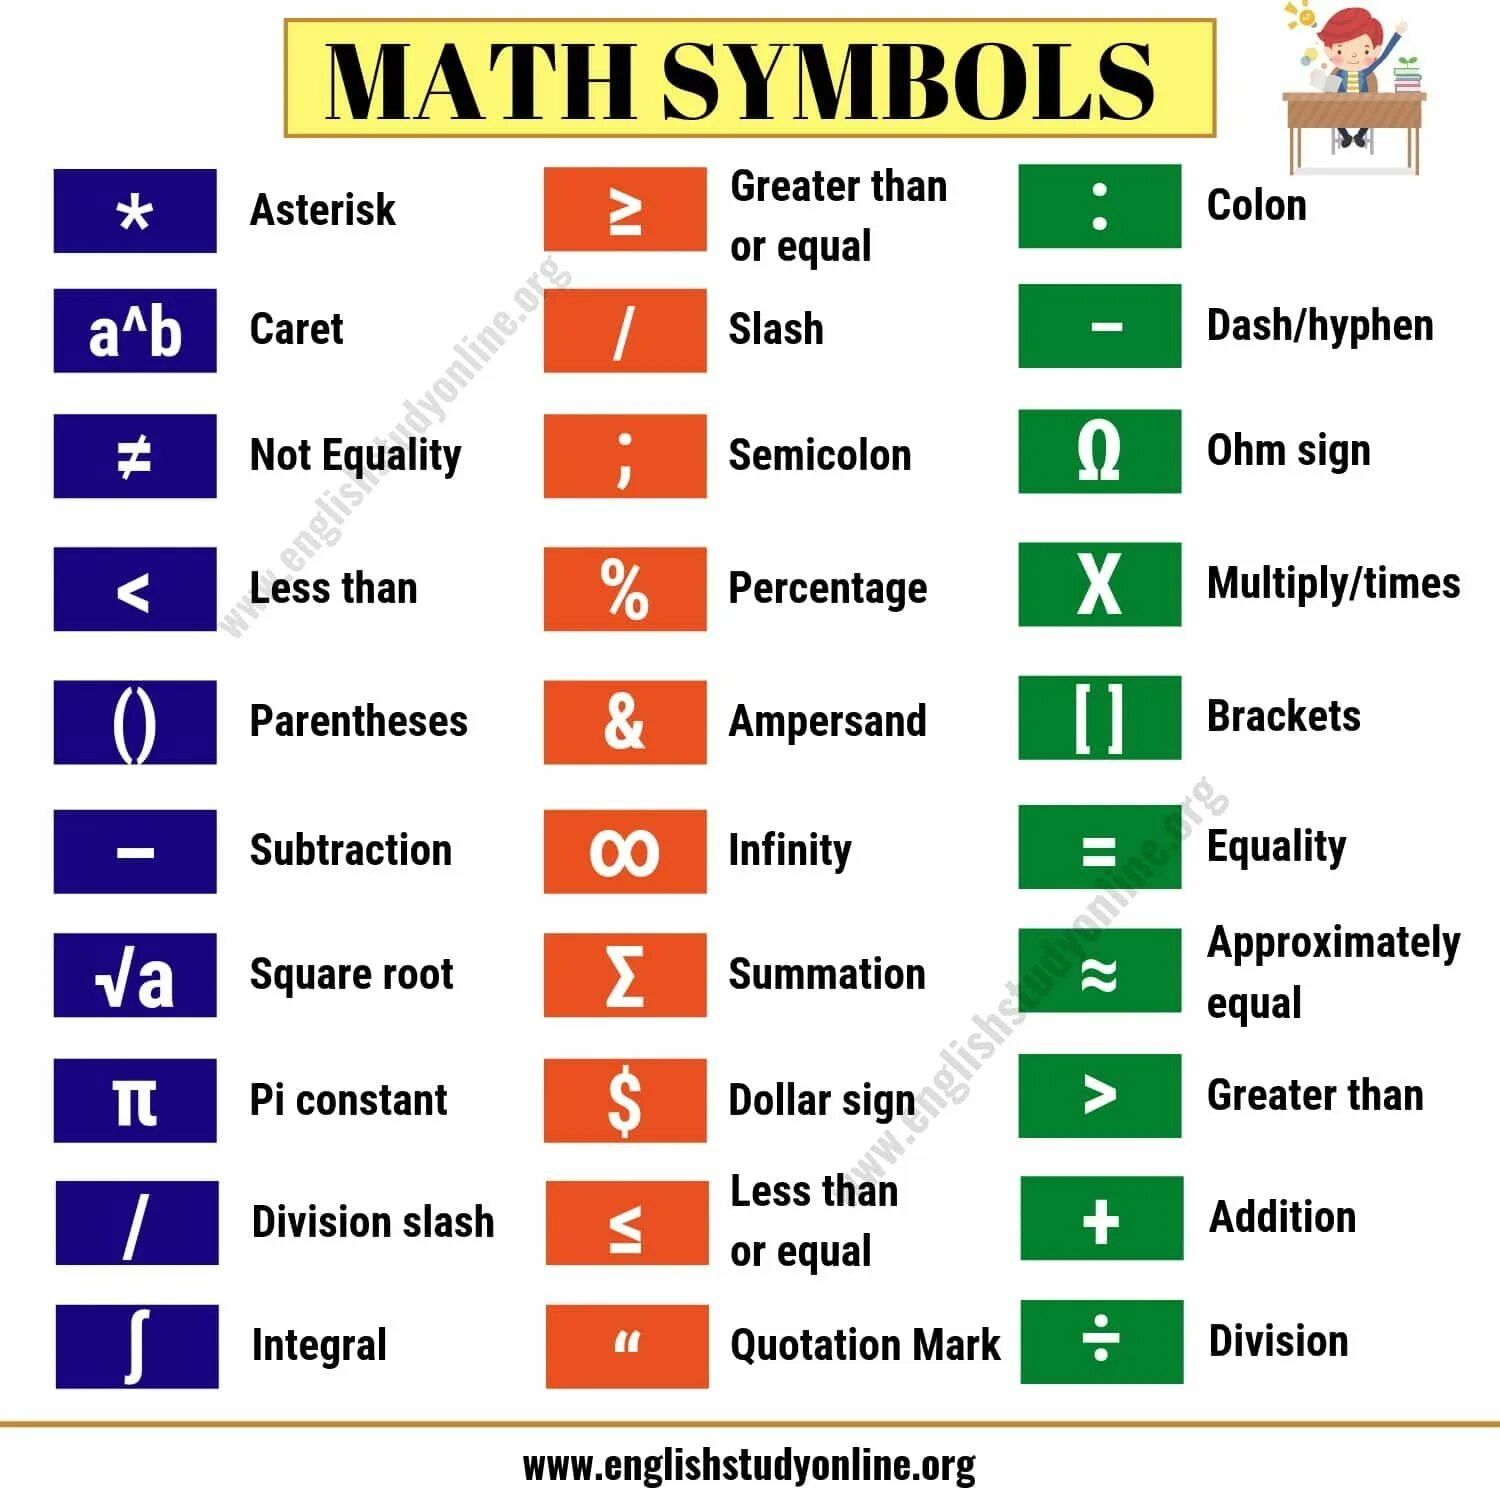 Как будет по английски математик. Математические символы на английском. Математические знаки на английском языке. Математический язык символы. Математические операции на английском языке.